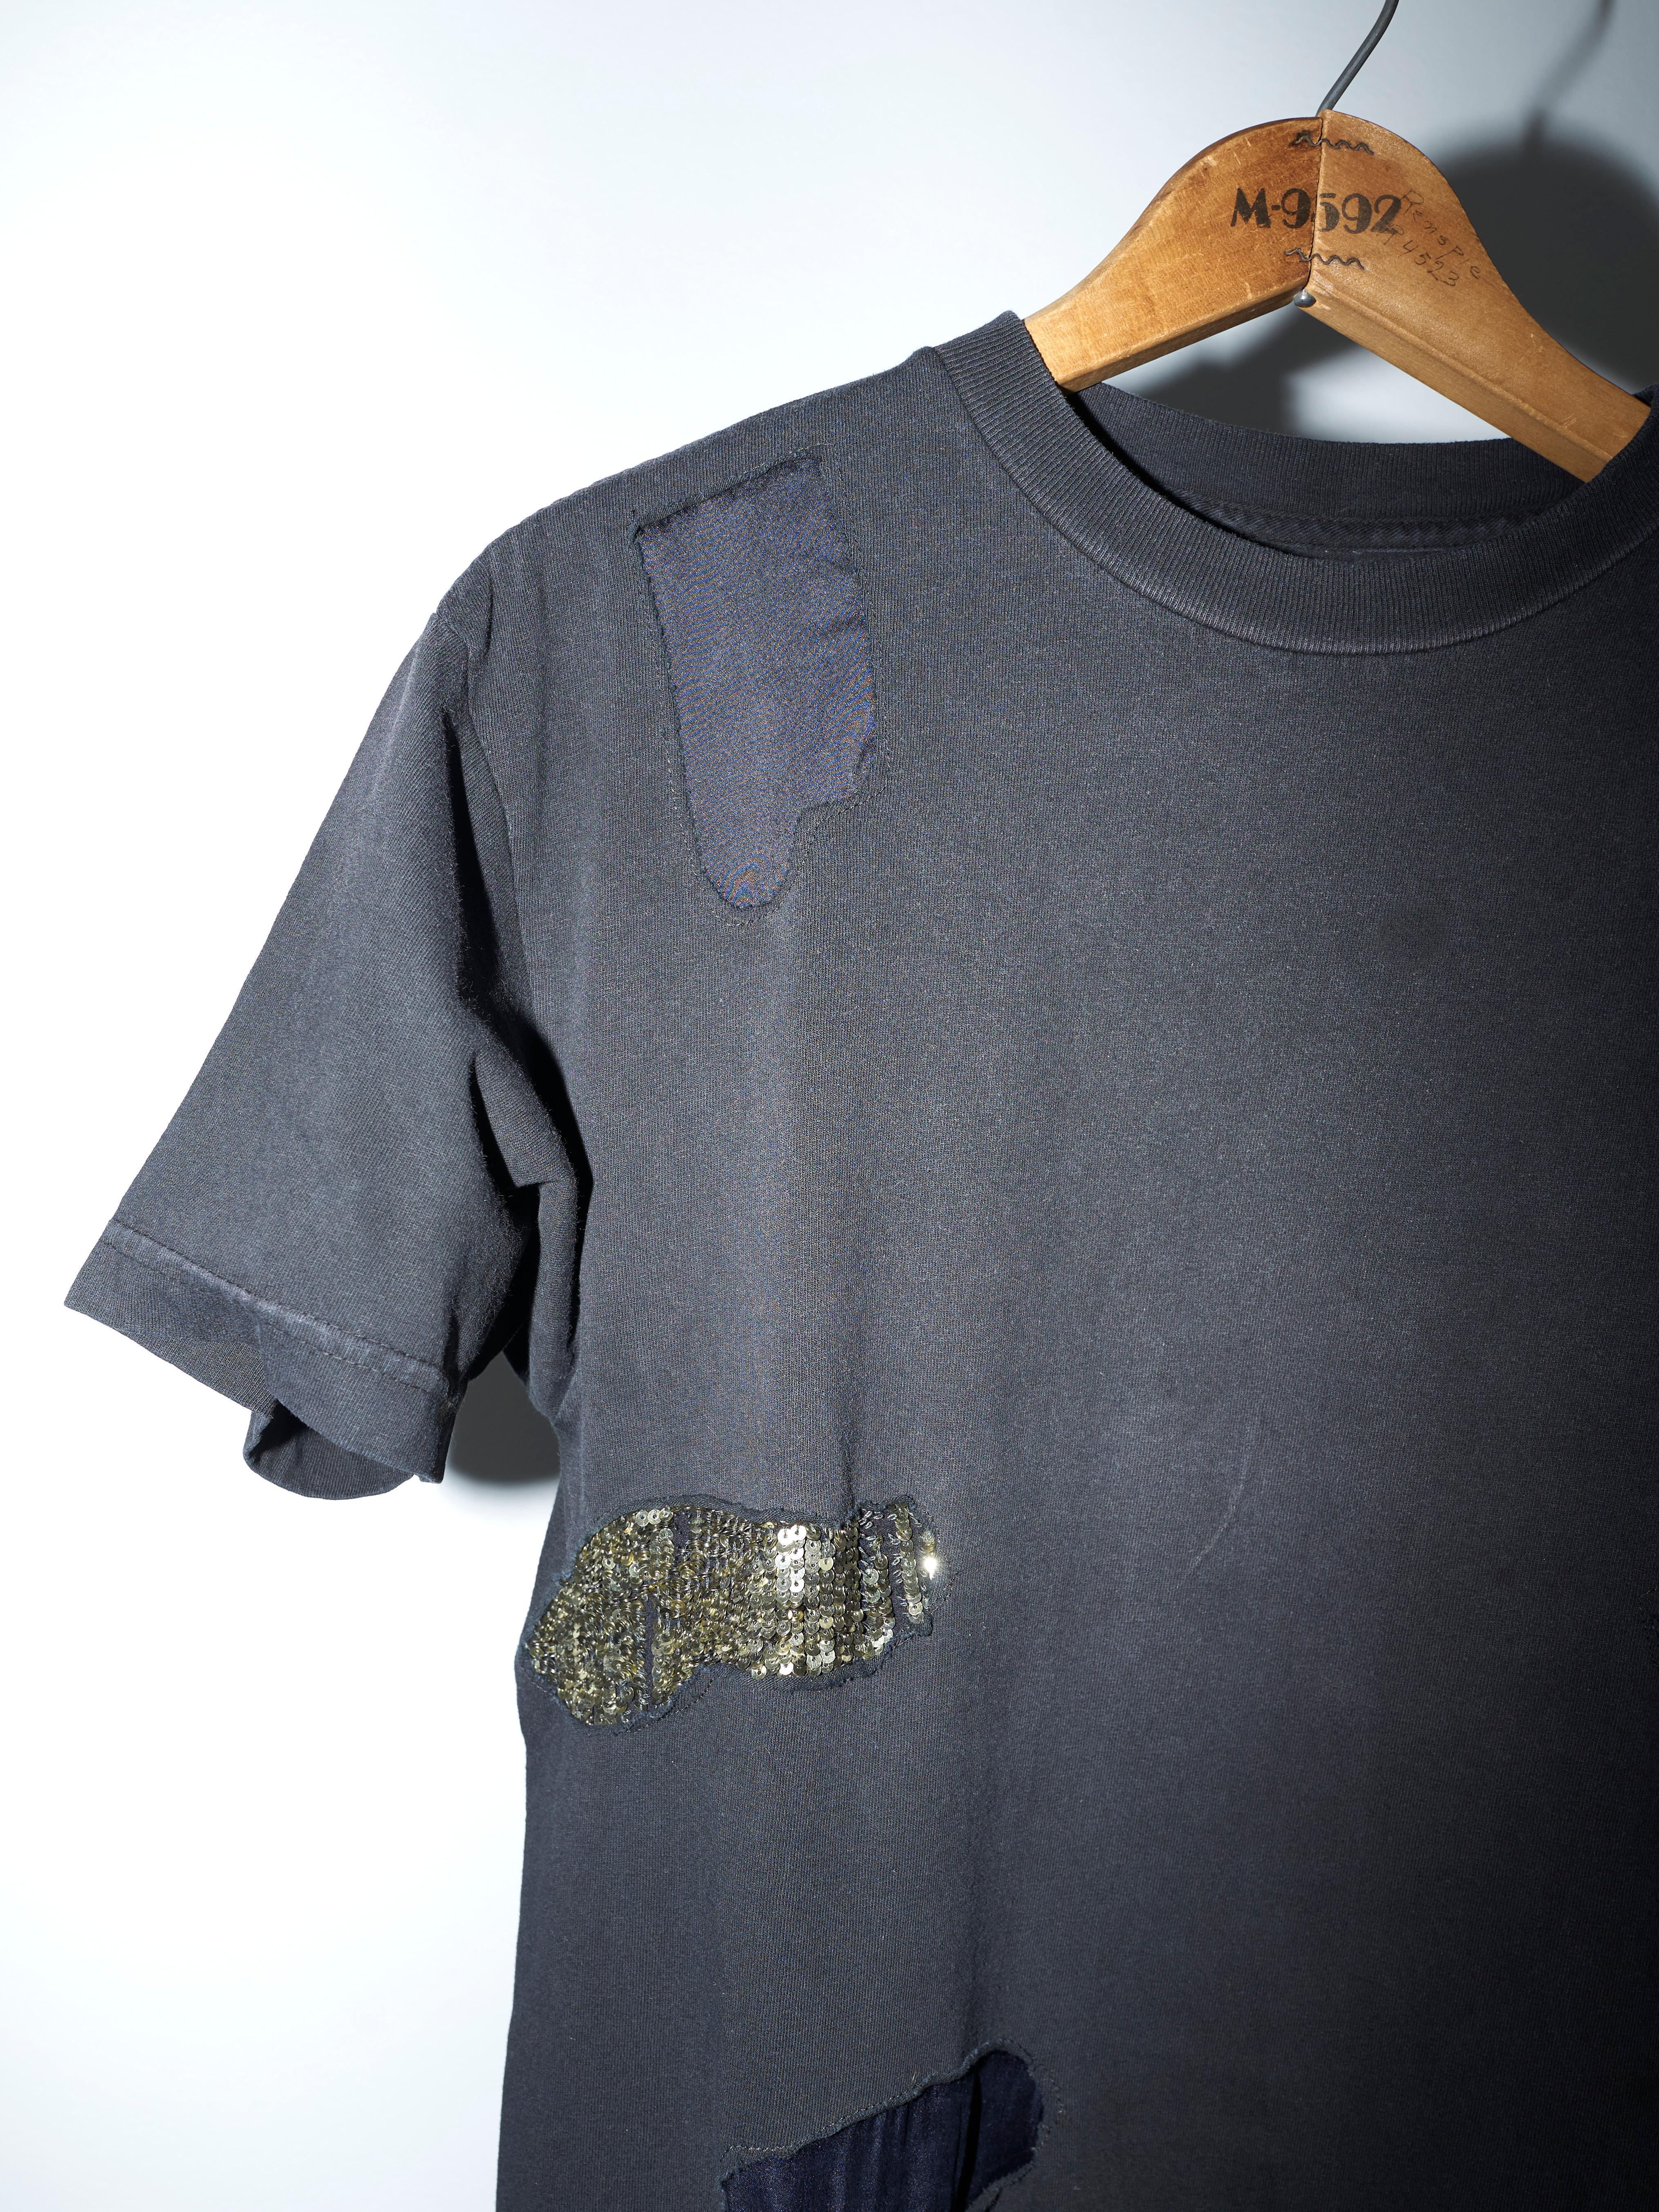 J Dauphin Black T-Shirt Embellished  Patch Work Sequin Silk Body Cotton  8